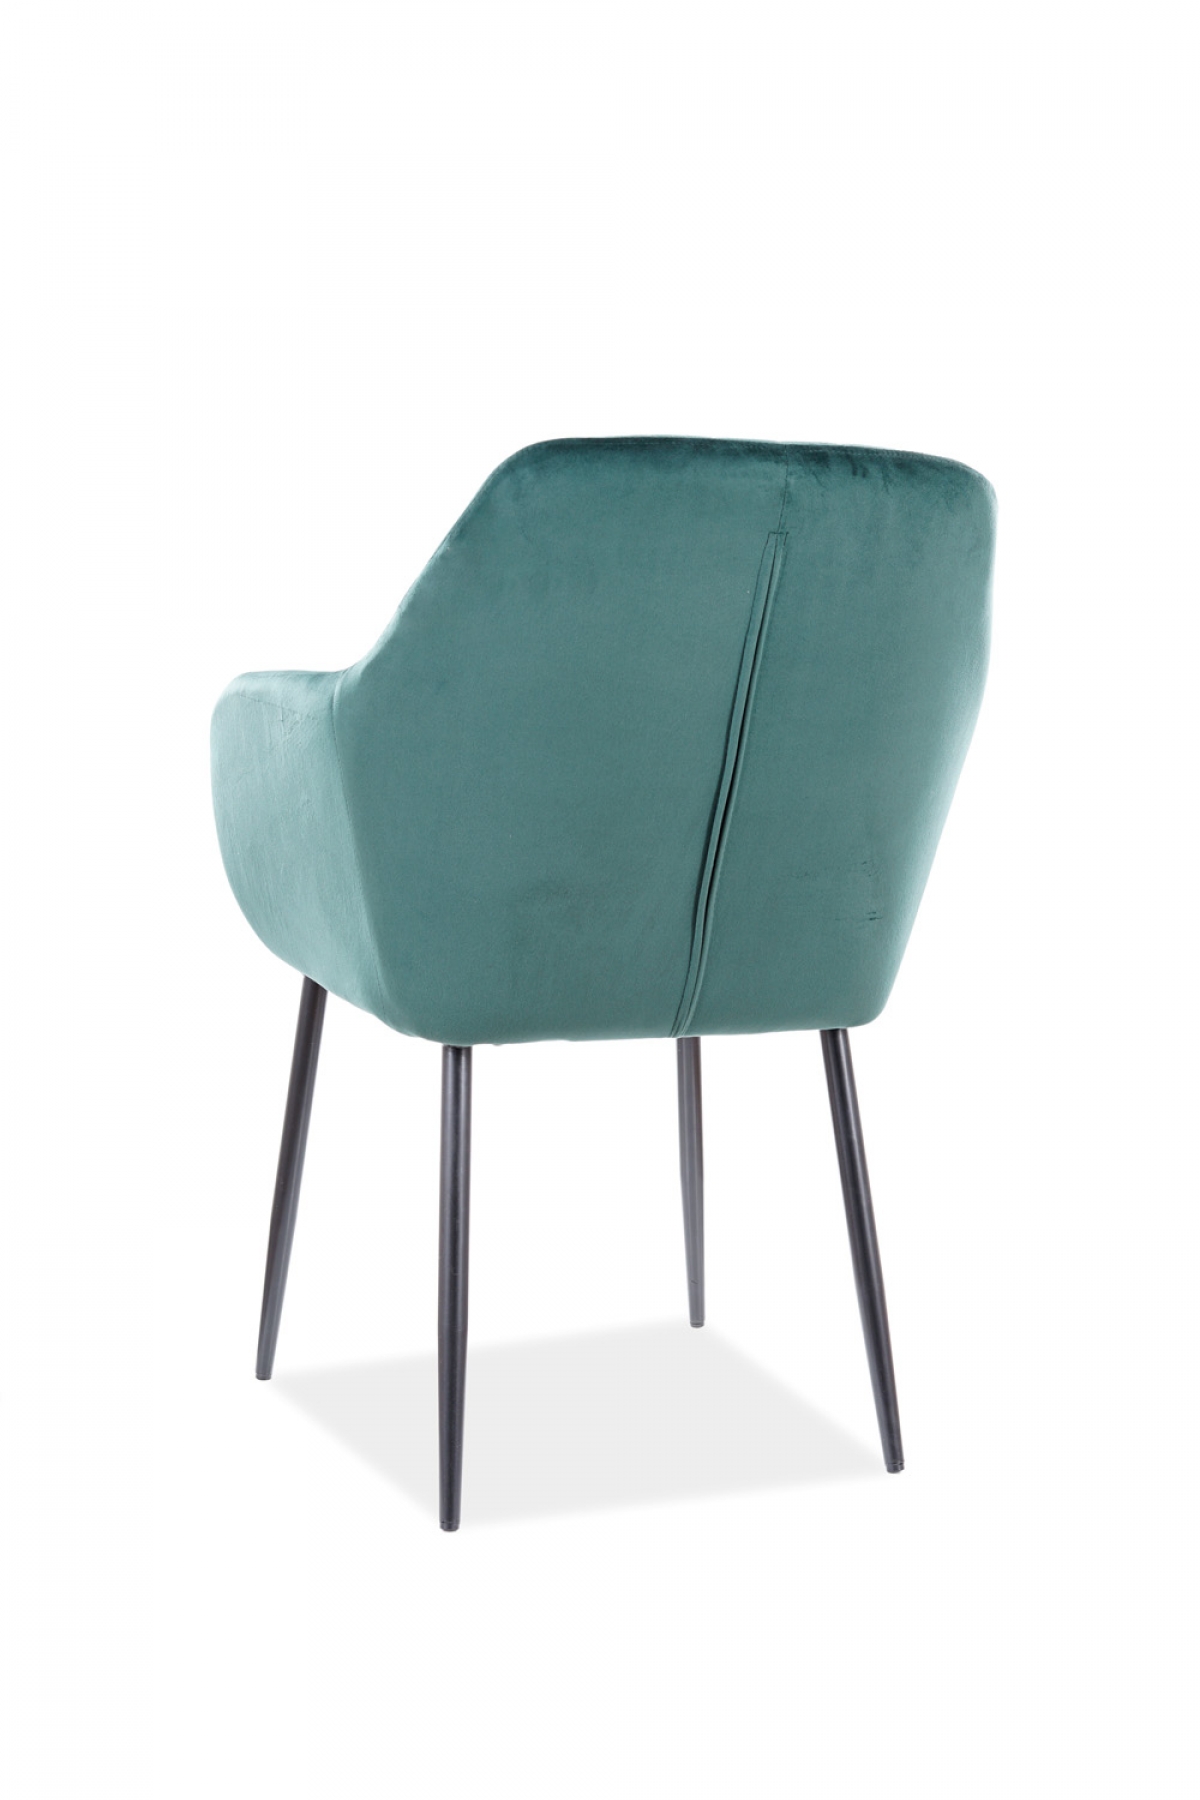 Krzesło tapicerowane Wenus Velvet - Bluvel 78 / zielony / czarne nogi krzesło tapicerowane wenus do jadalni